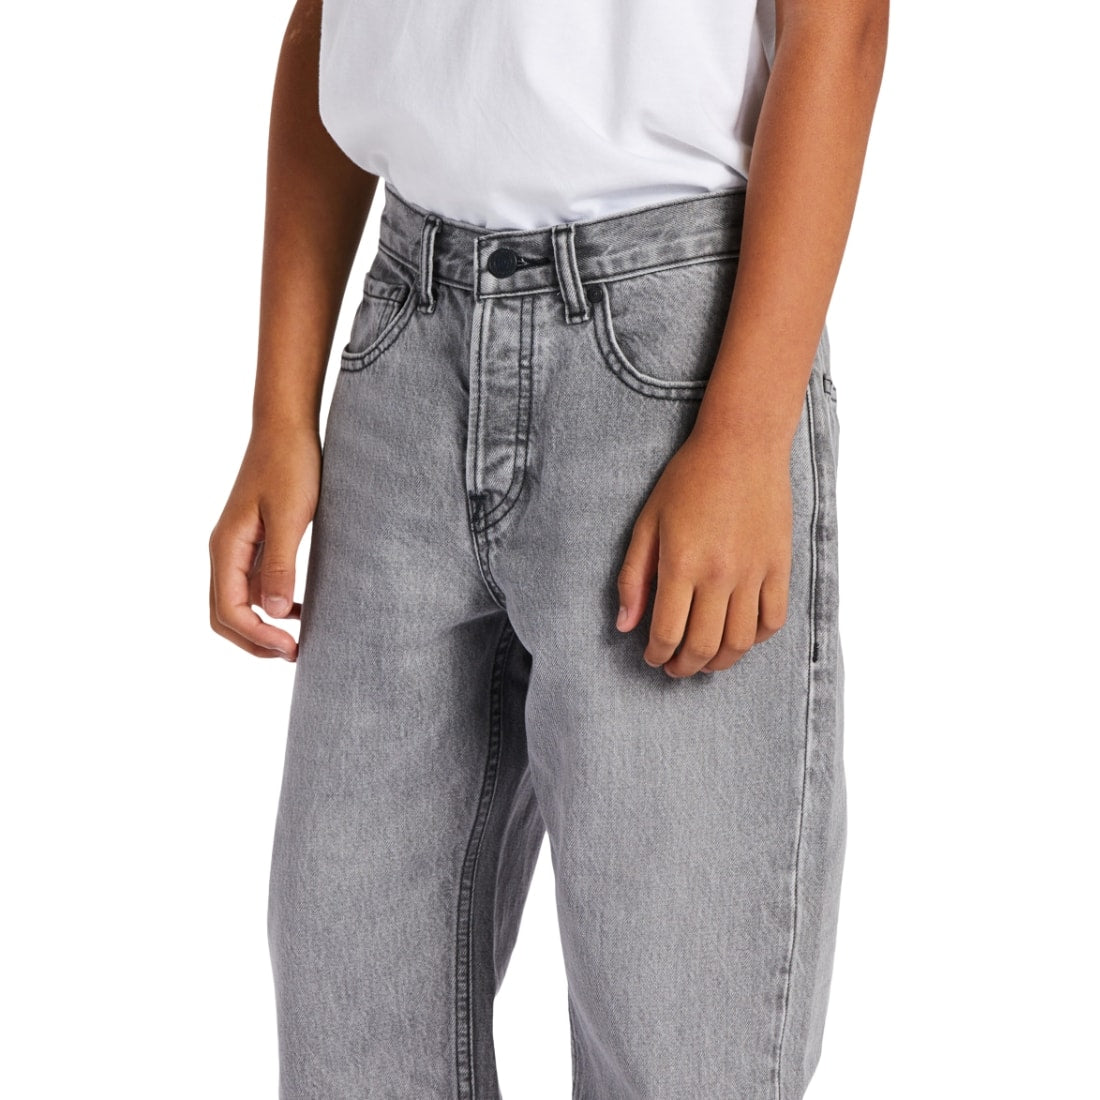 DC Boys Worker Baggy Denim Jeans - Grey Wash